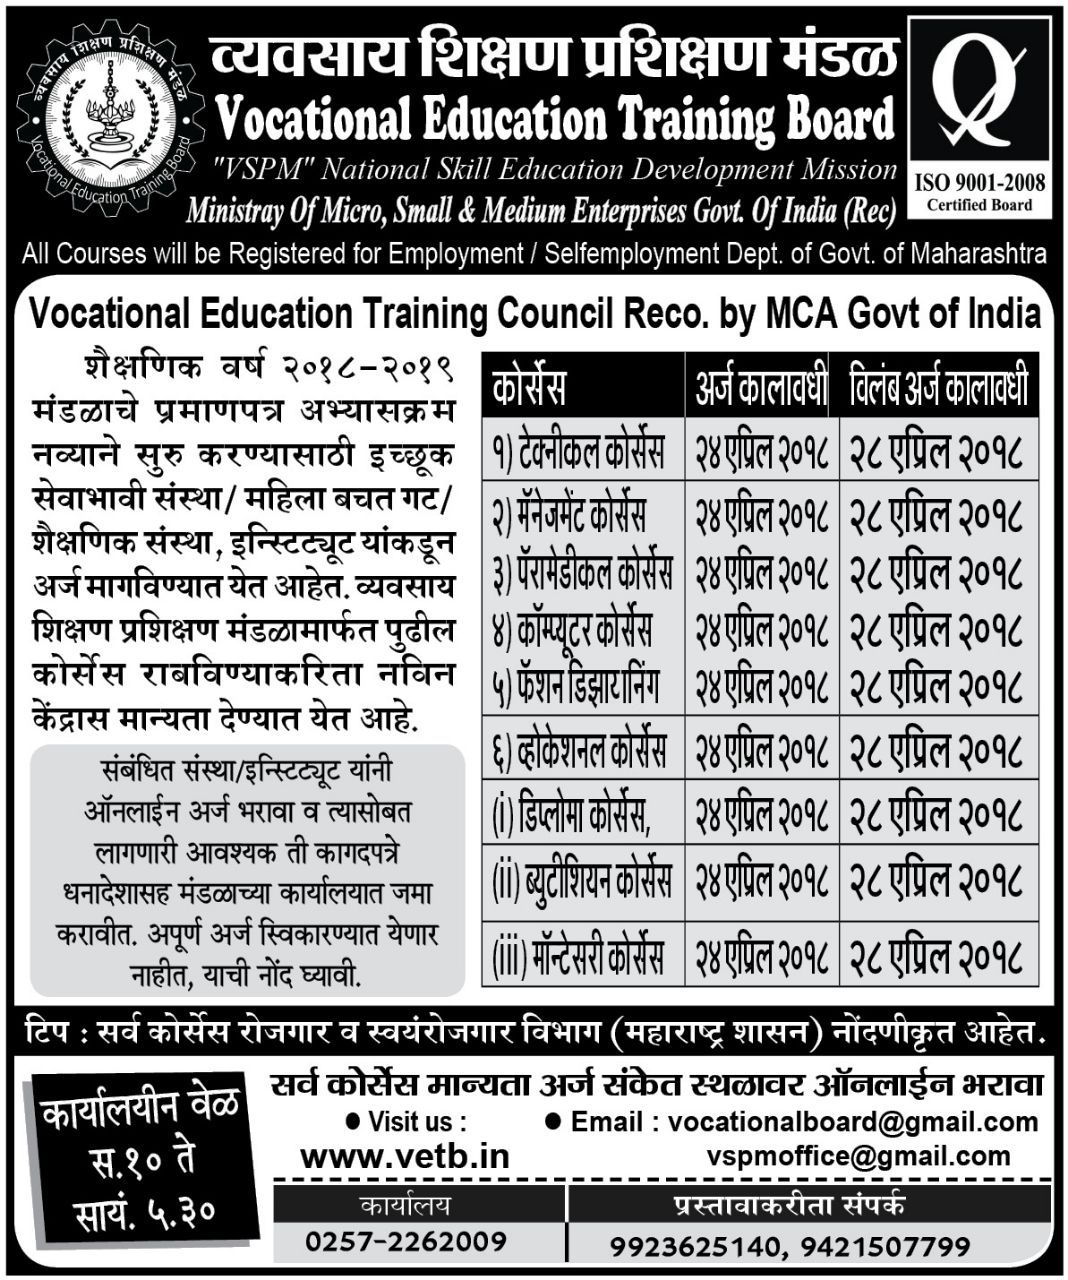 advt_Vocational_Education_Training_Board.jpg?Vetb